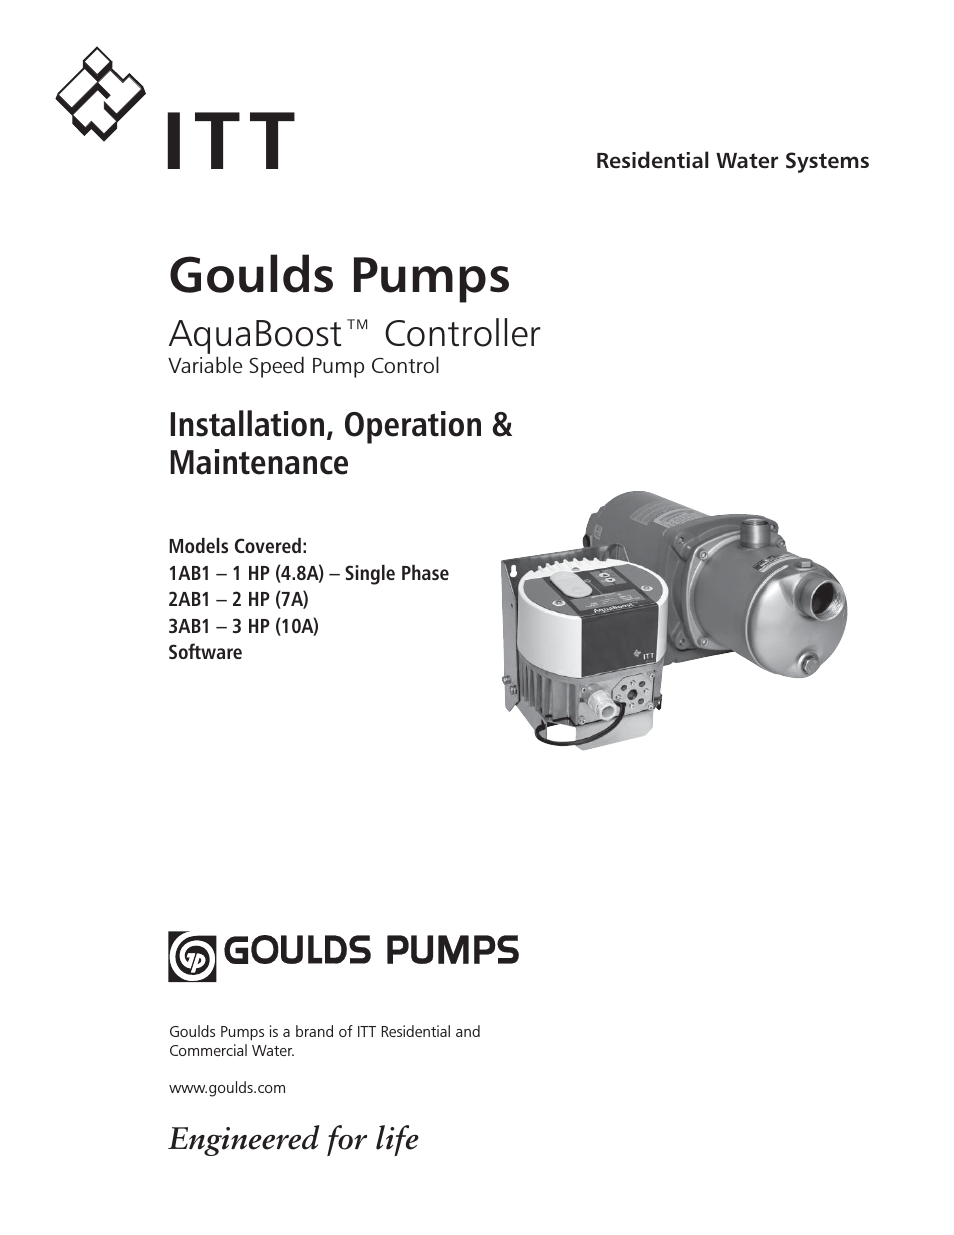 IM112 AquaBoost 1AB1 & 2AB1 Variable Speed Pump Controllers